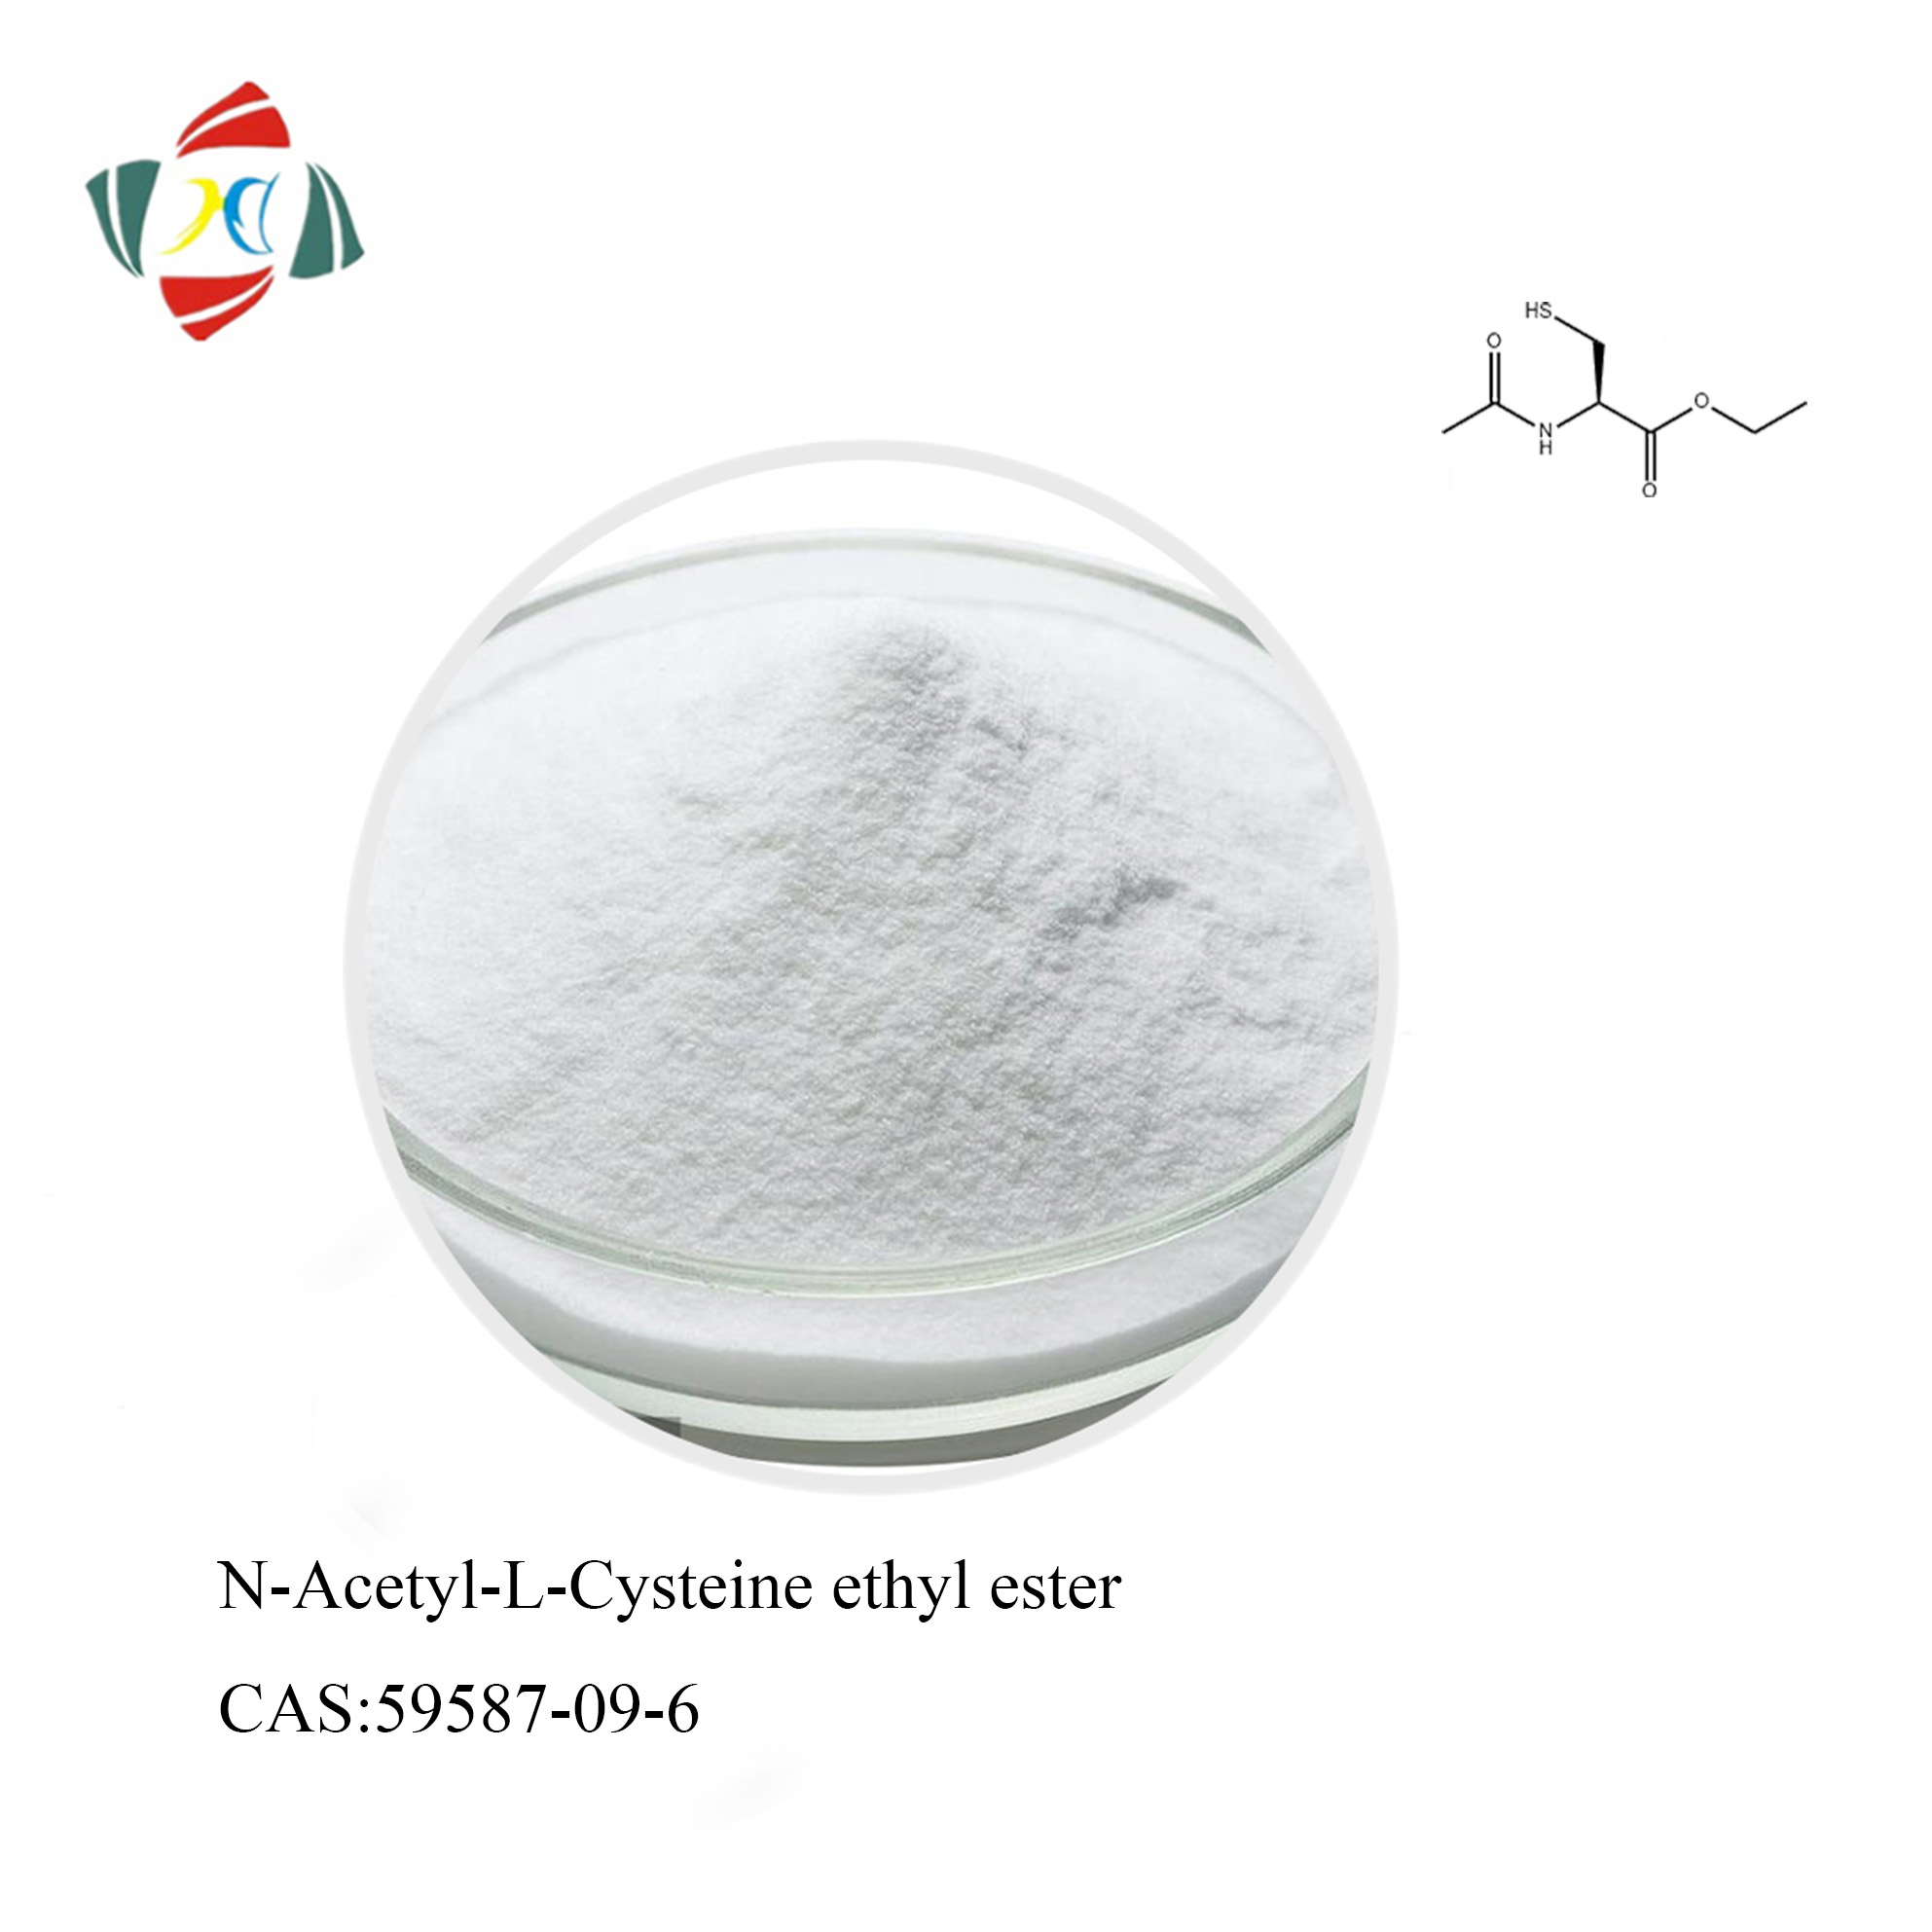 MACET Ester etylowy N-acetylo-L-cysteiny (NACET) CAS 59587-09-6